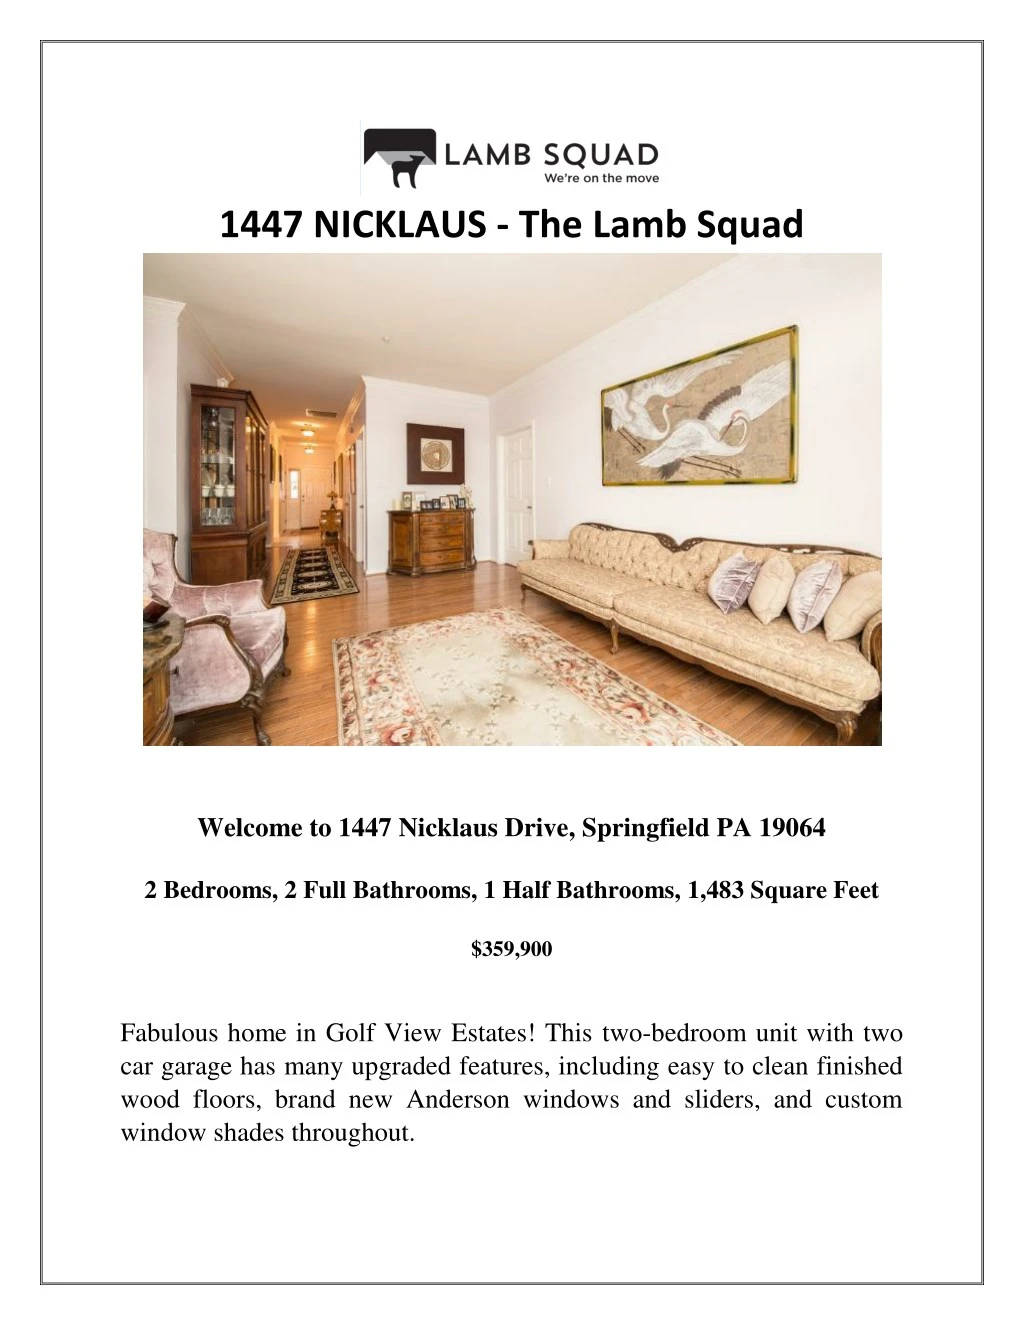 1447 nicklaus the lamb squad